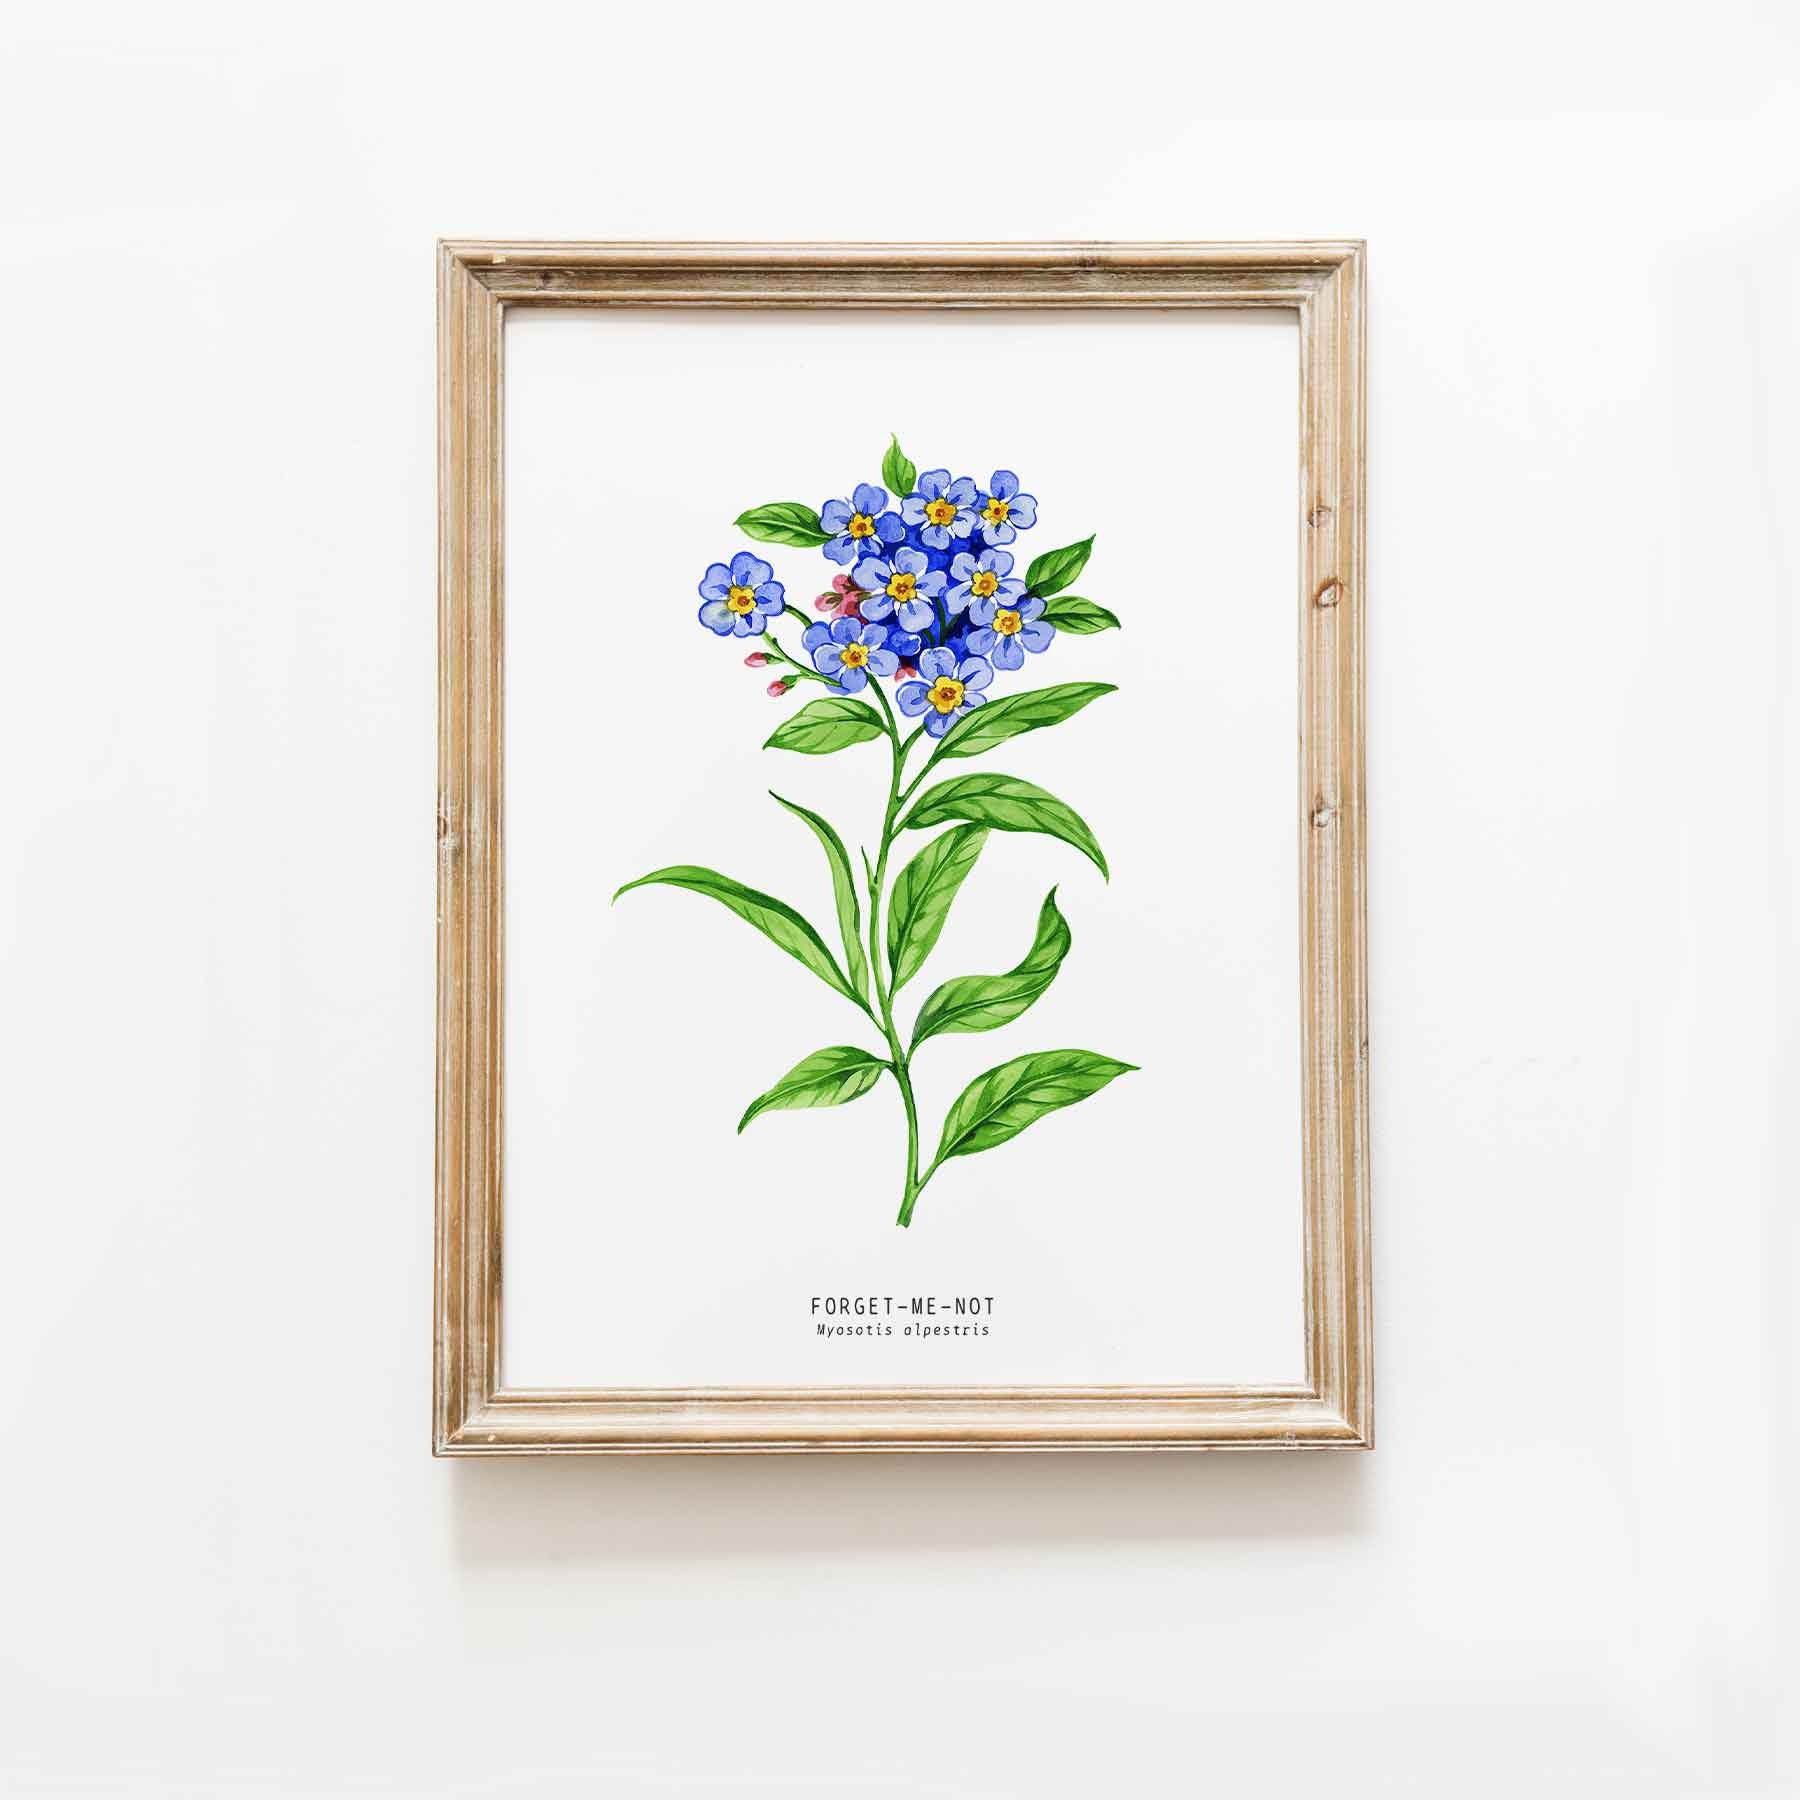 Forget-me-nots- Alaska's State Flower- Gouache art print